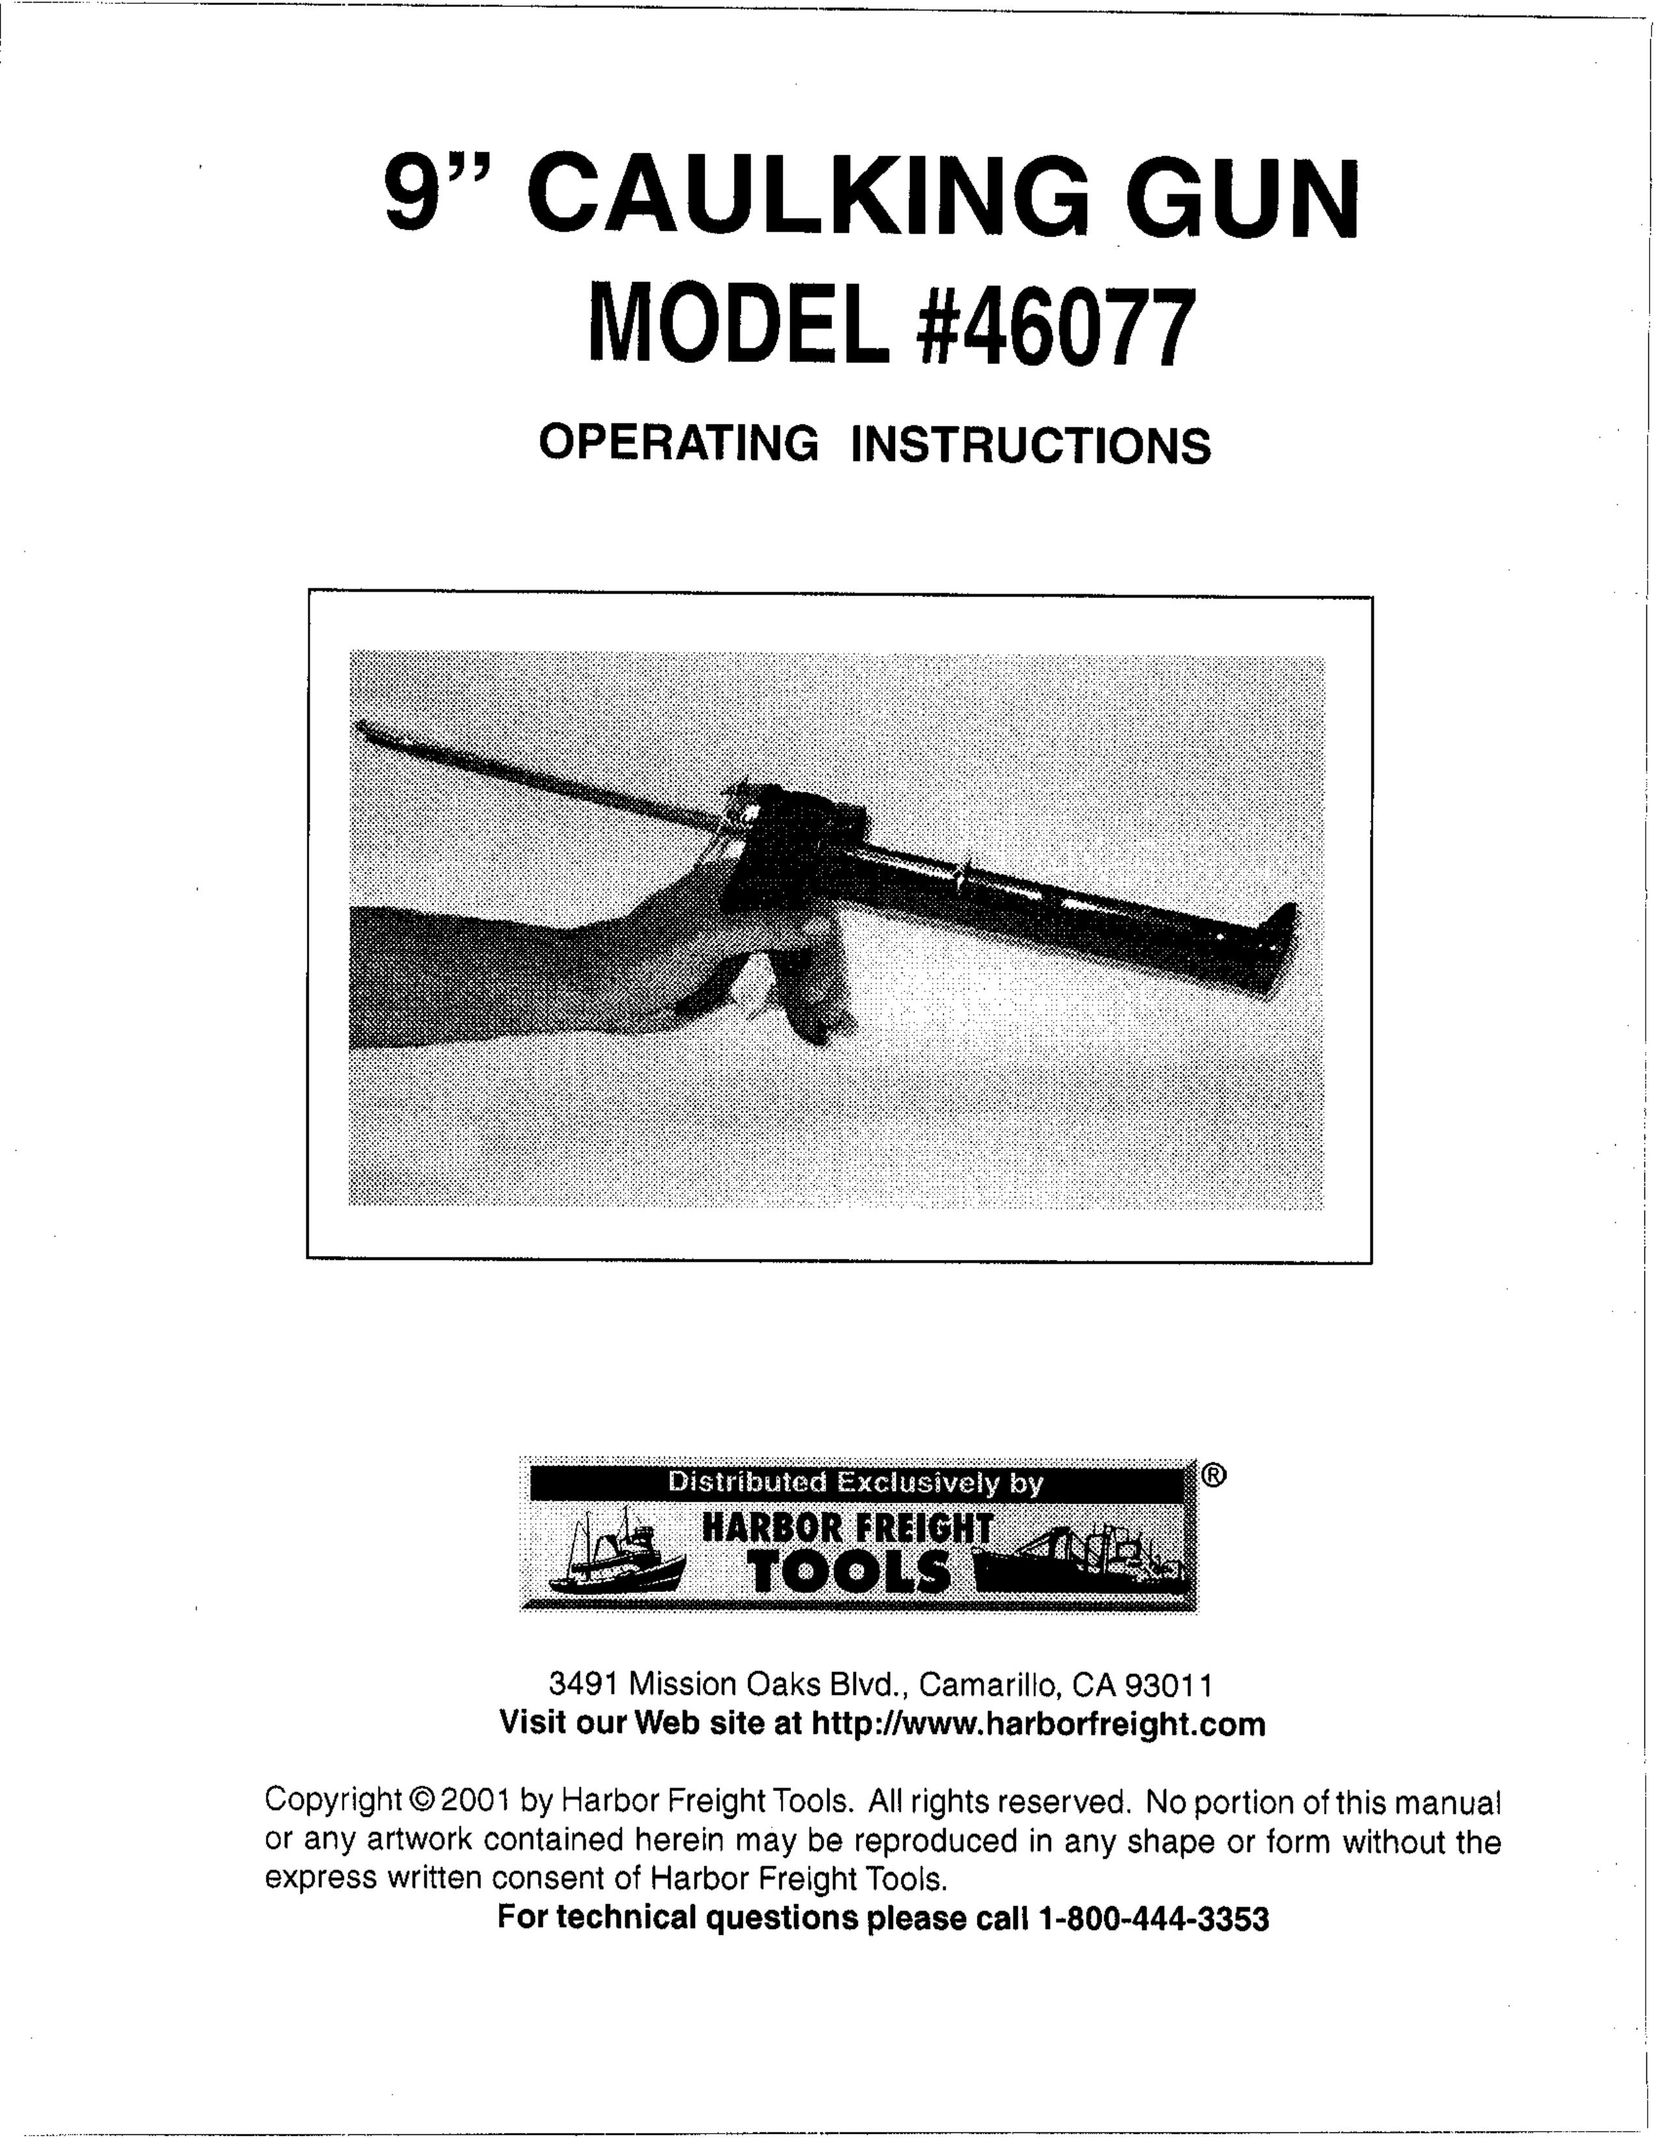 Harbor Freight Tools 46077 Caulking Gun User Manual